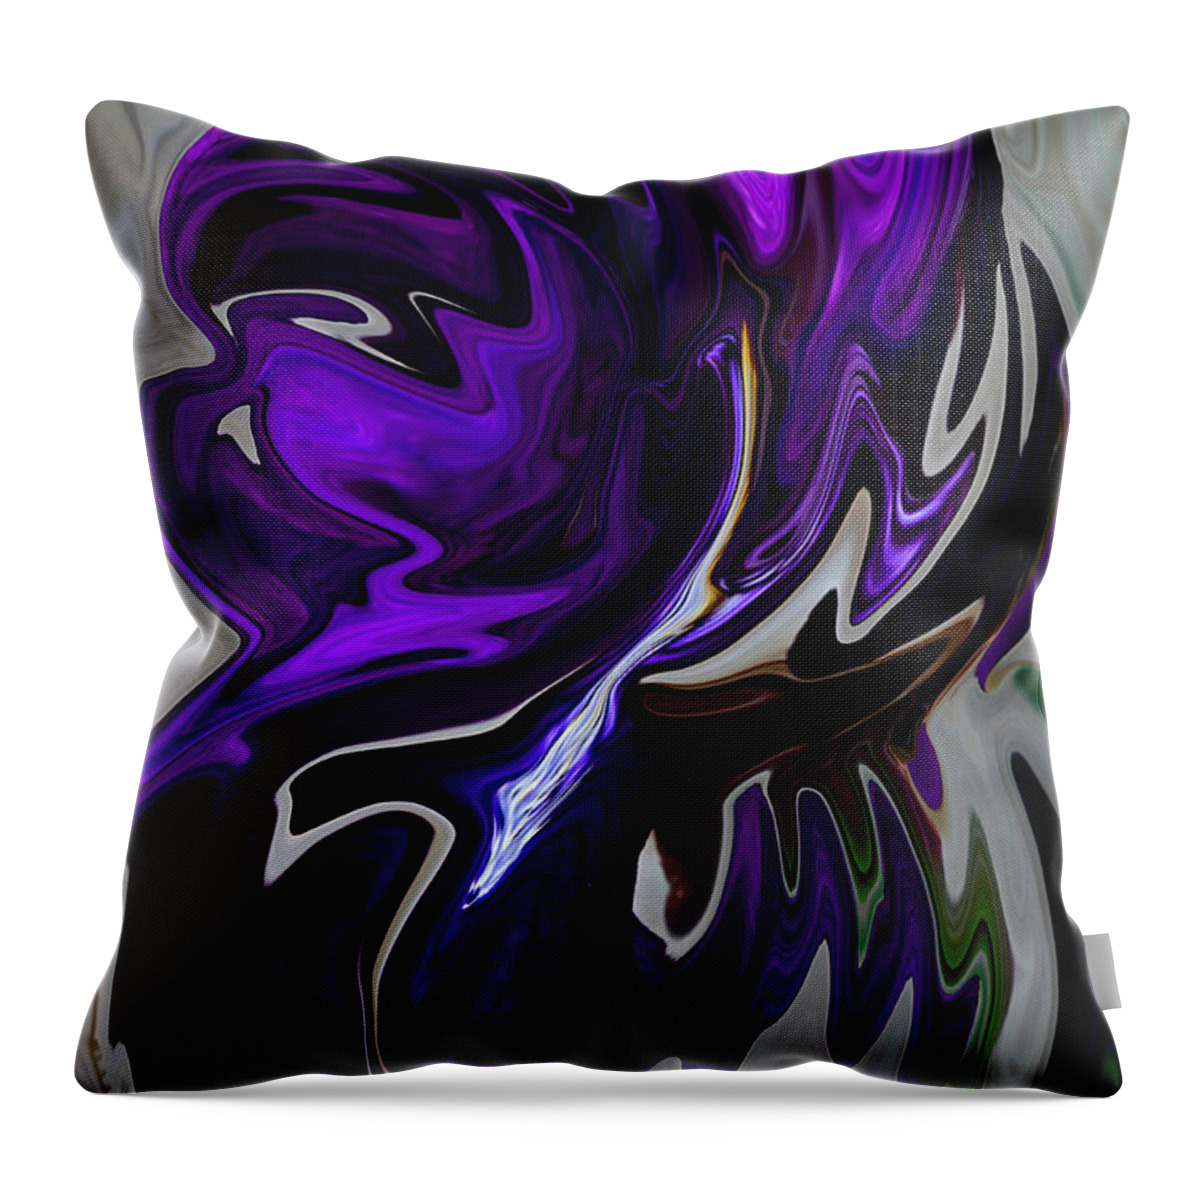 Iris Throw Pillow featuring the digital art Purple Swirl by Karen Harrison Brown